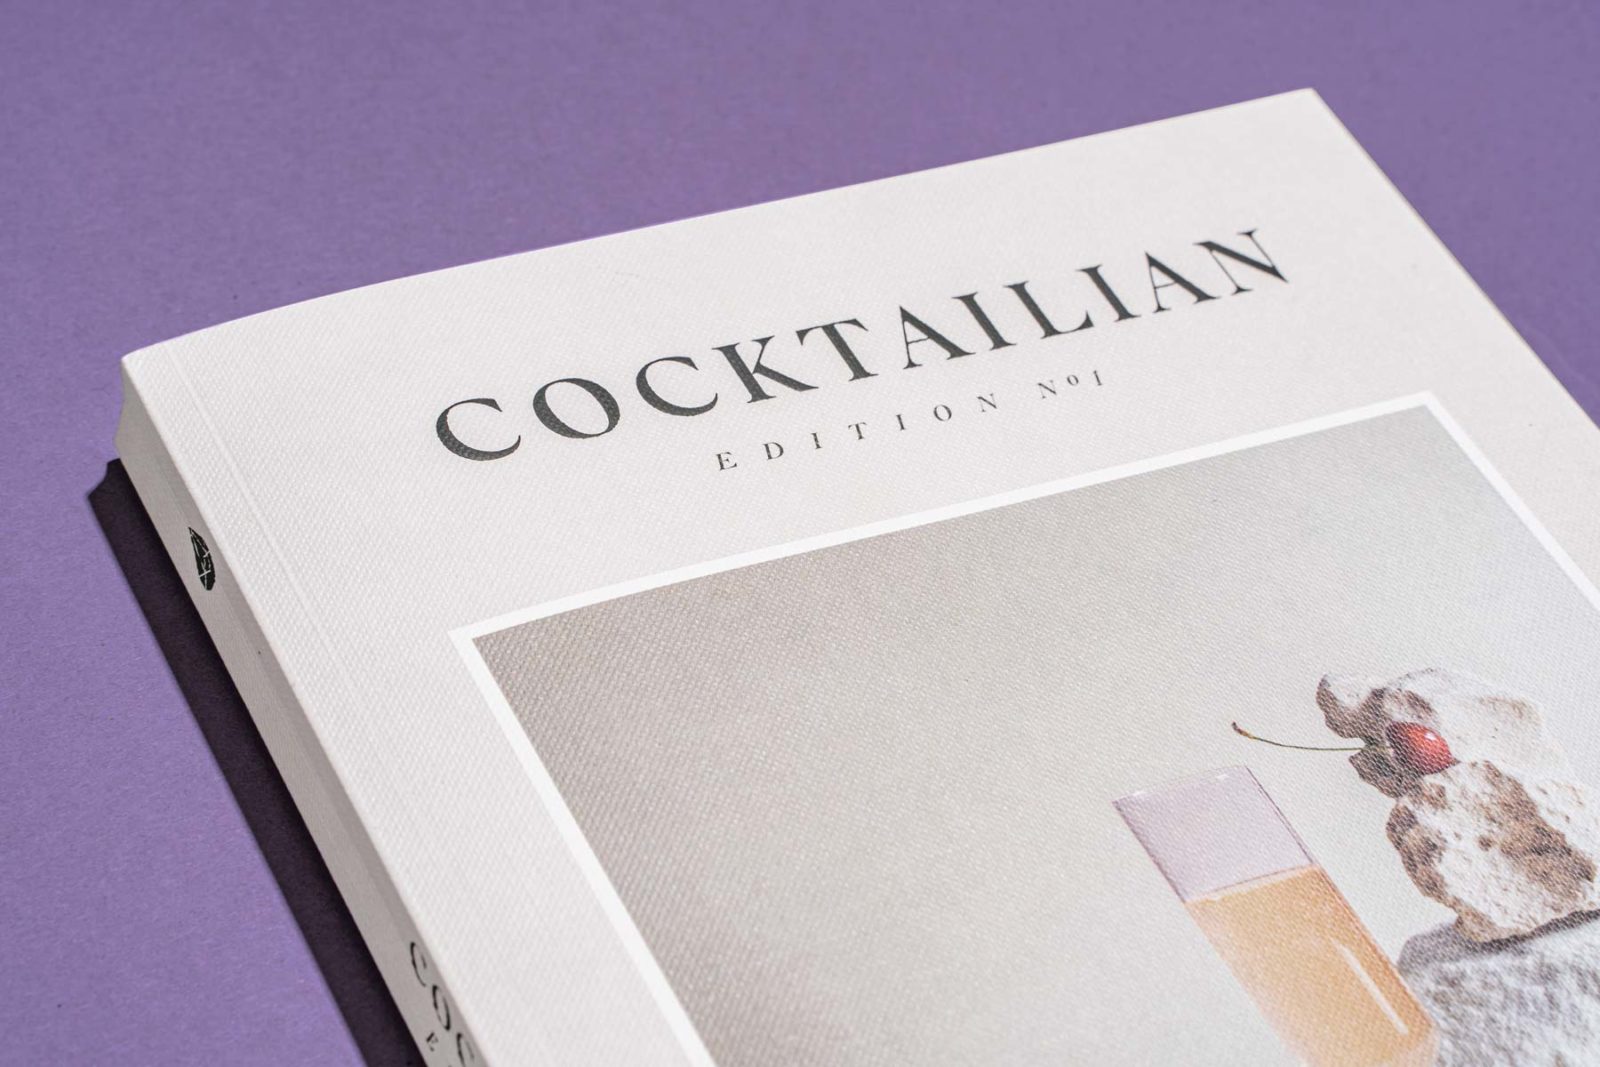 Editorial Design Cocktailian Bookazin